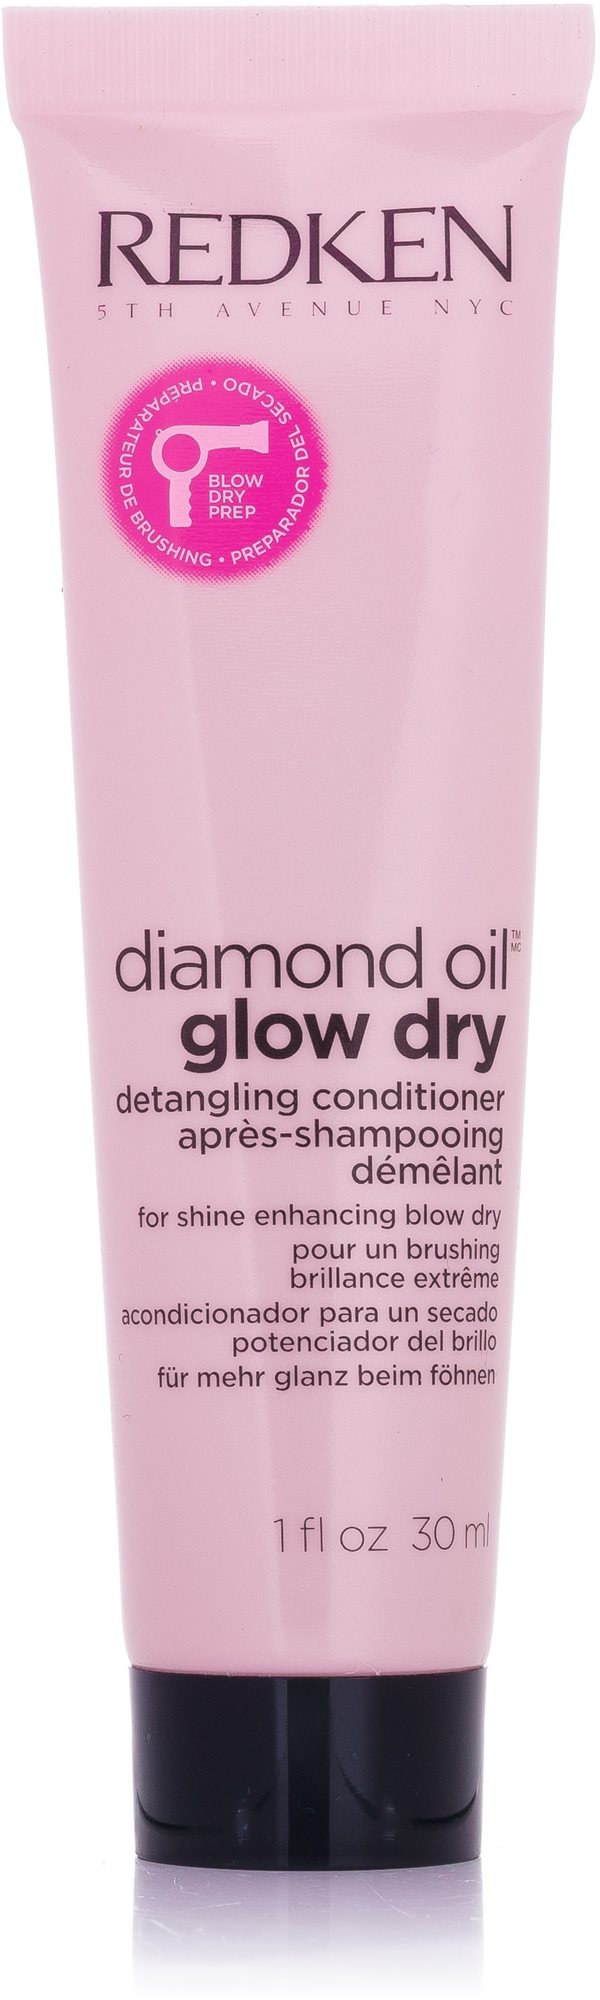 REDKEN Diamond Oil Glow Dry Conditioner 30 ml